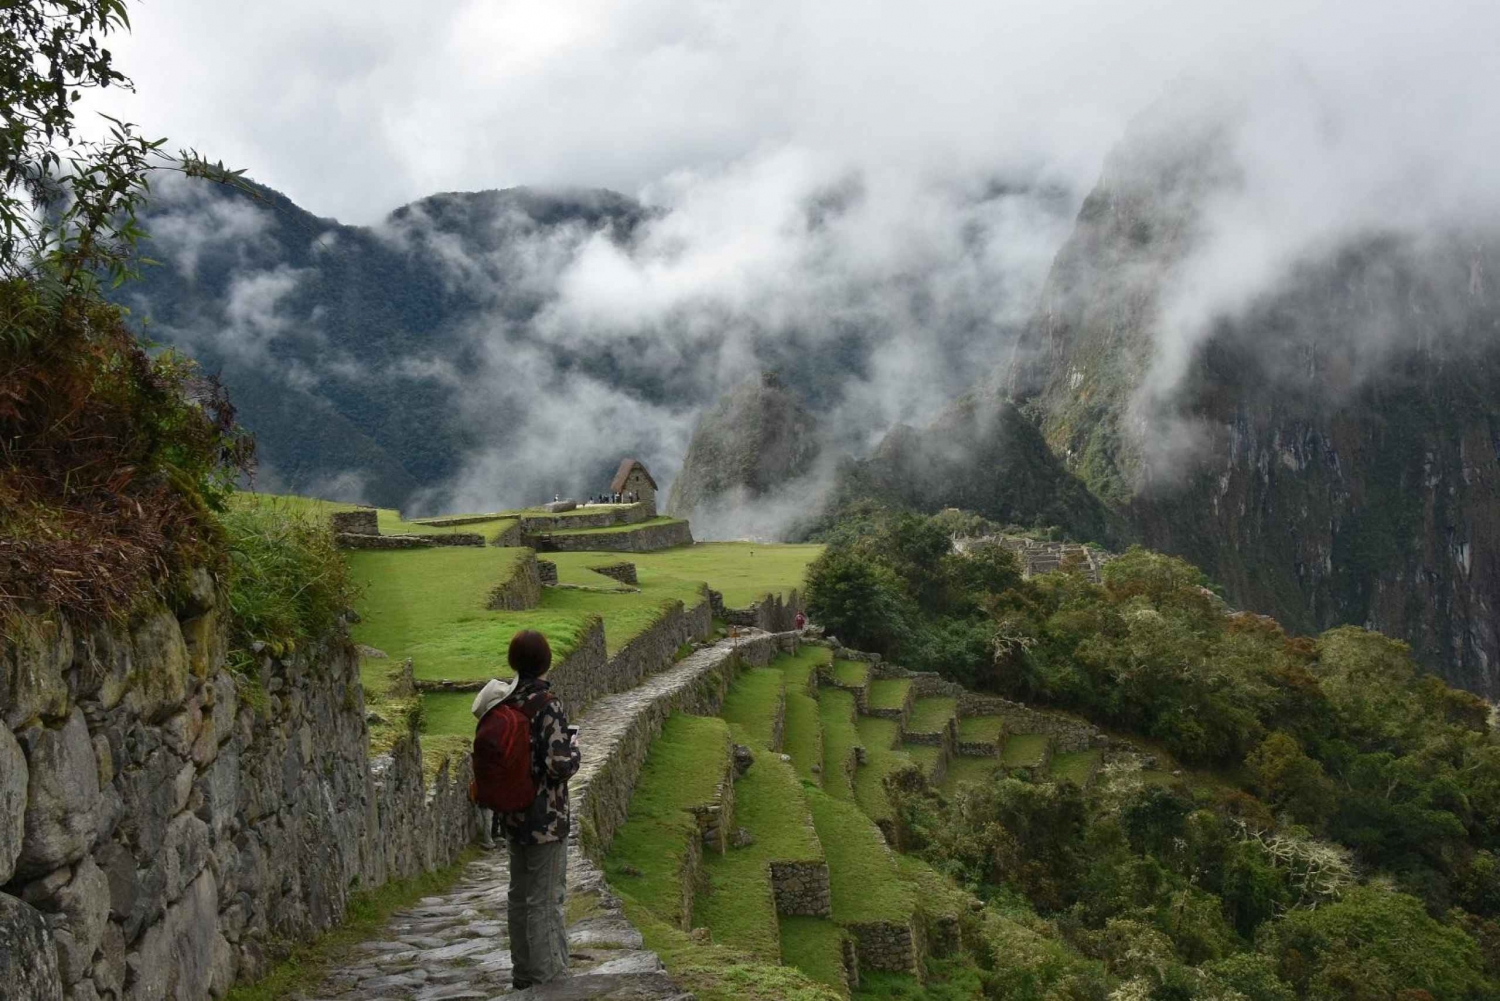 Petit chemin de l'Inca vers le Machu Picchu